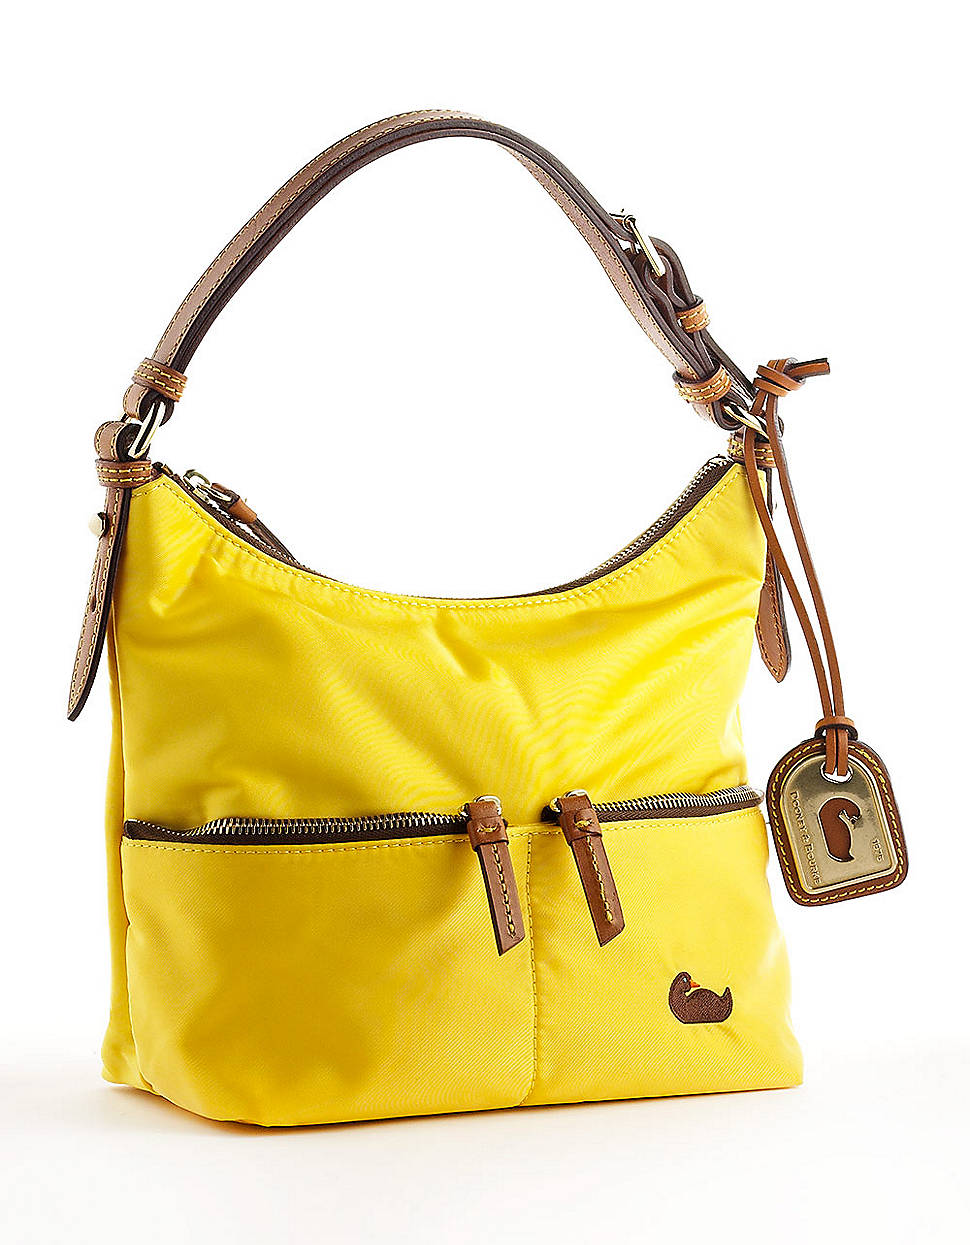 Dooney & Bourke Nylon Small Zipper Sac Bag in Yellow - Lyst